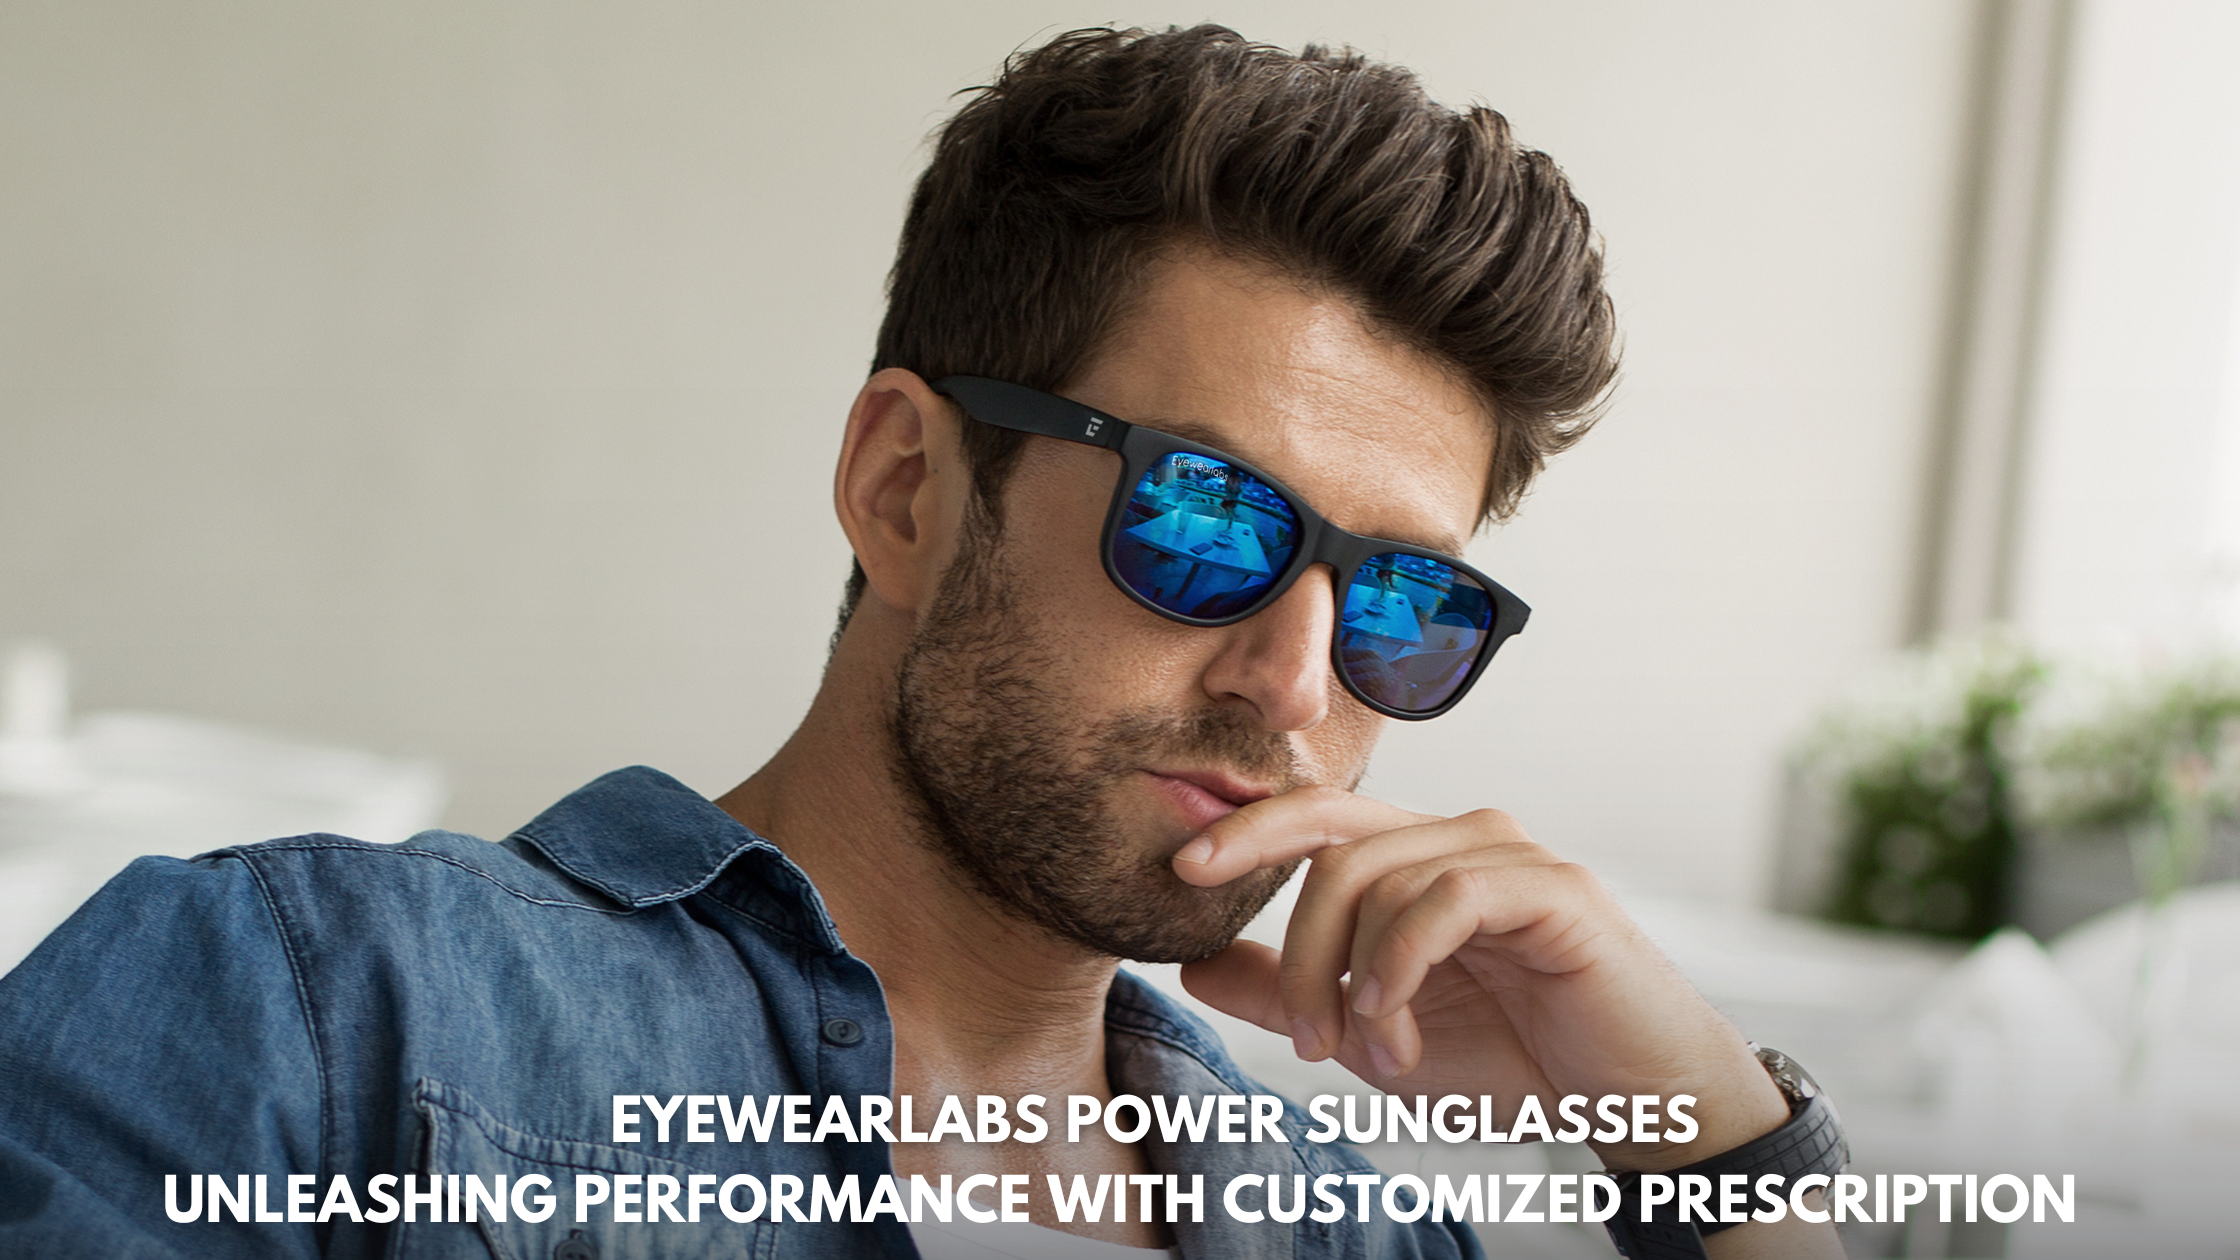 Eyewearlabs Power Sunglasses: Unleashing Performance with Customized Prescription